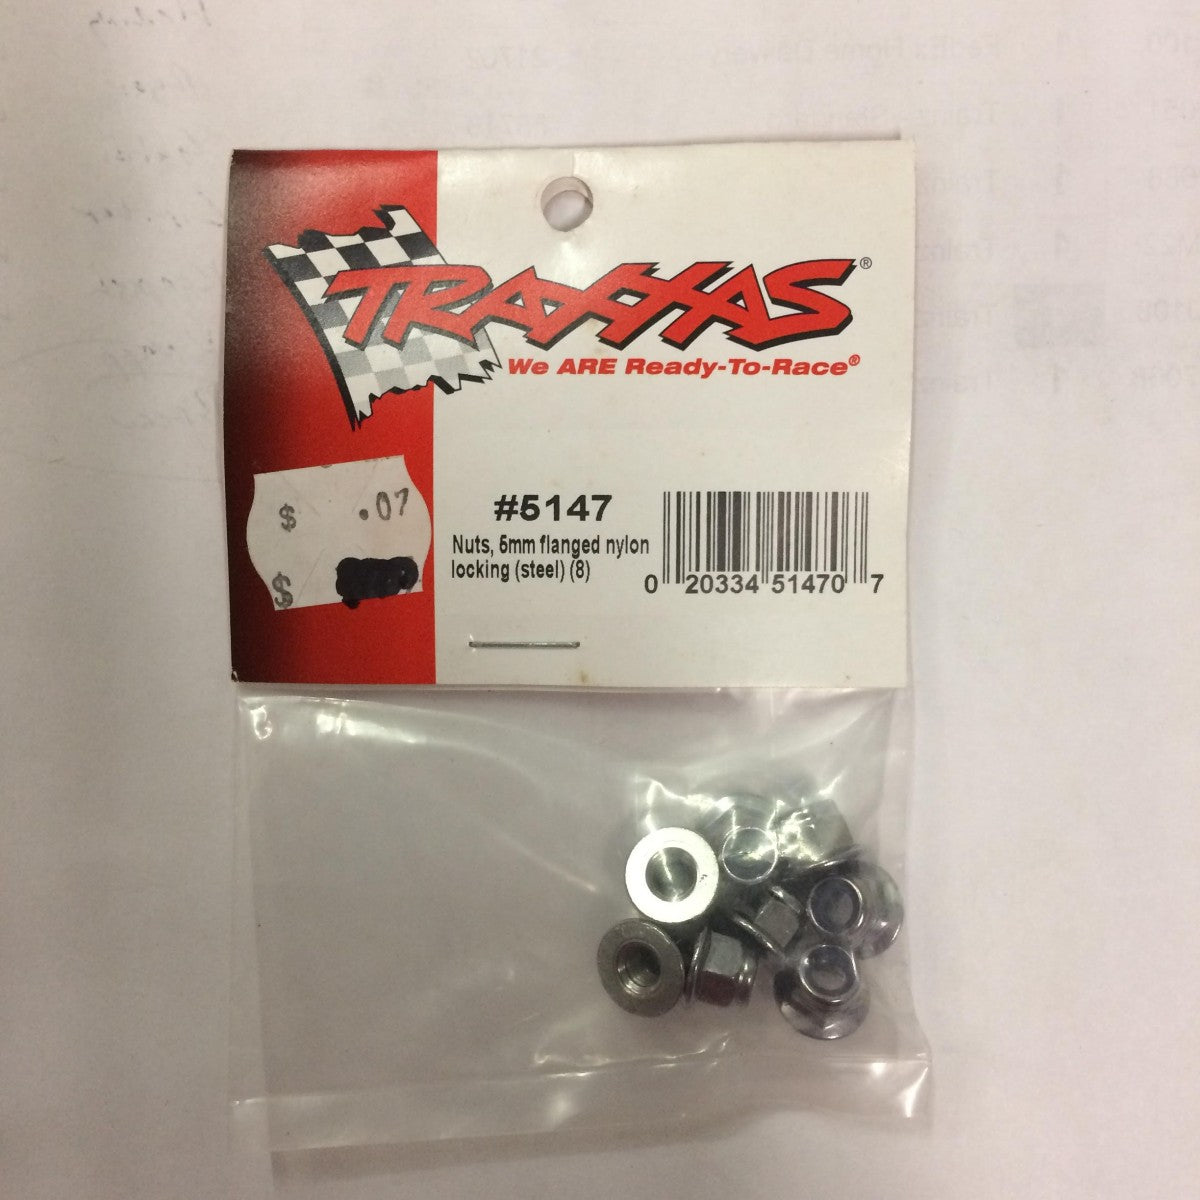 Traxxas 5147 Nuts, 5mm Flanged Nylon Locking Steel